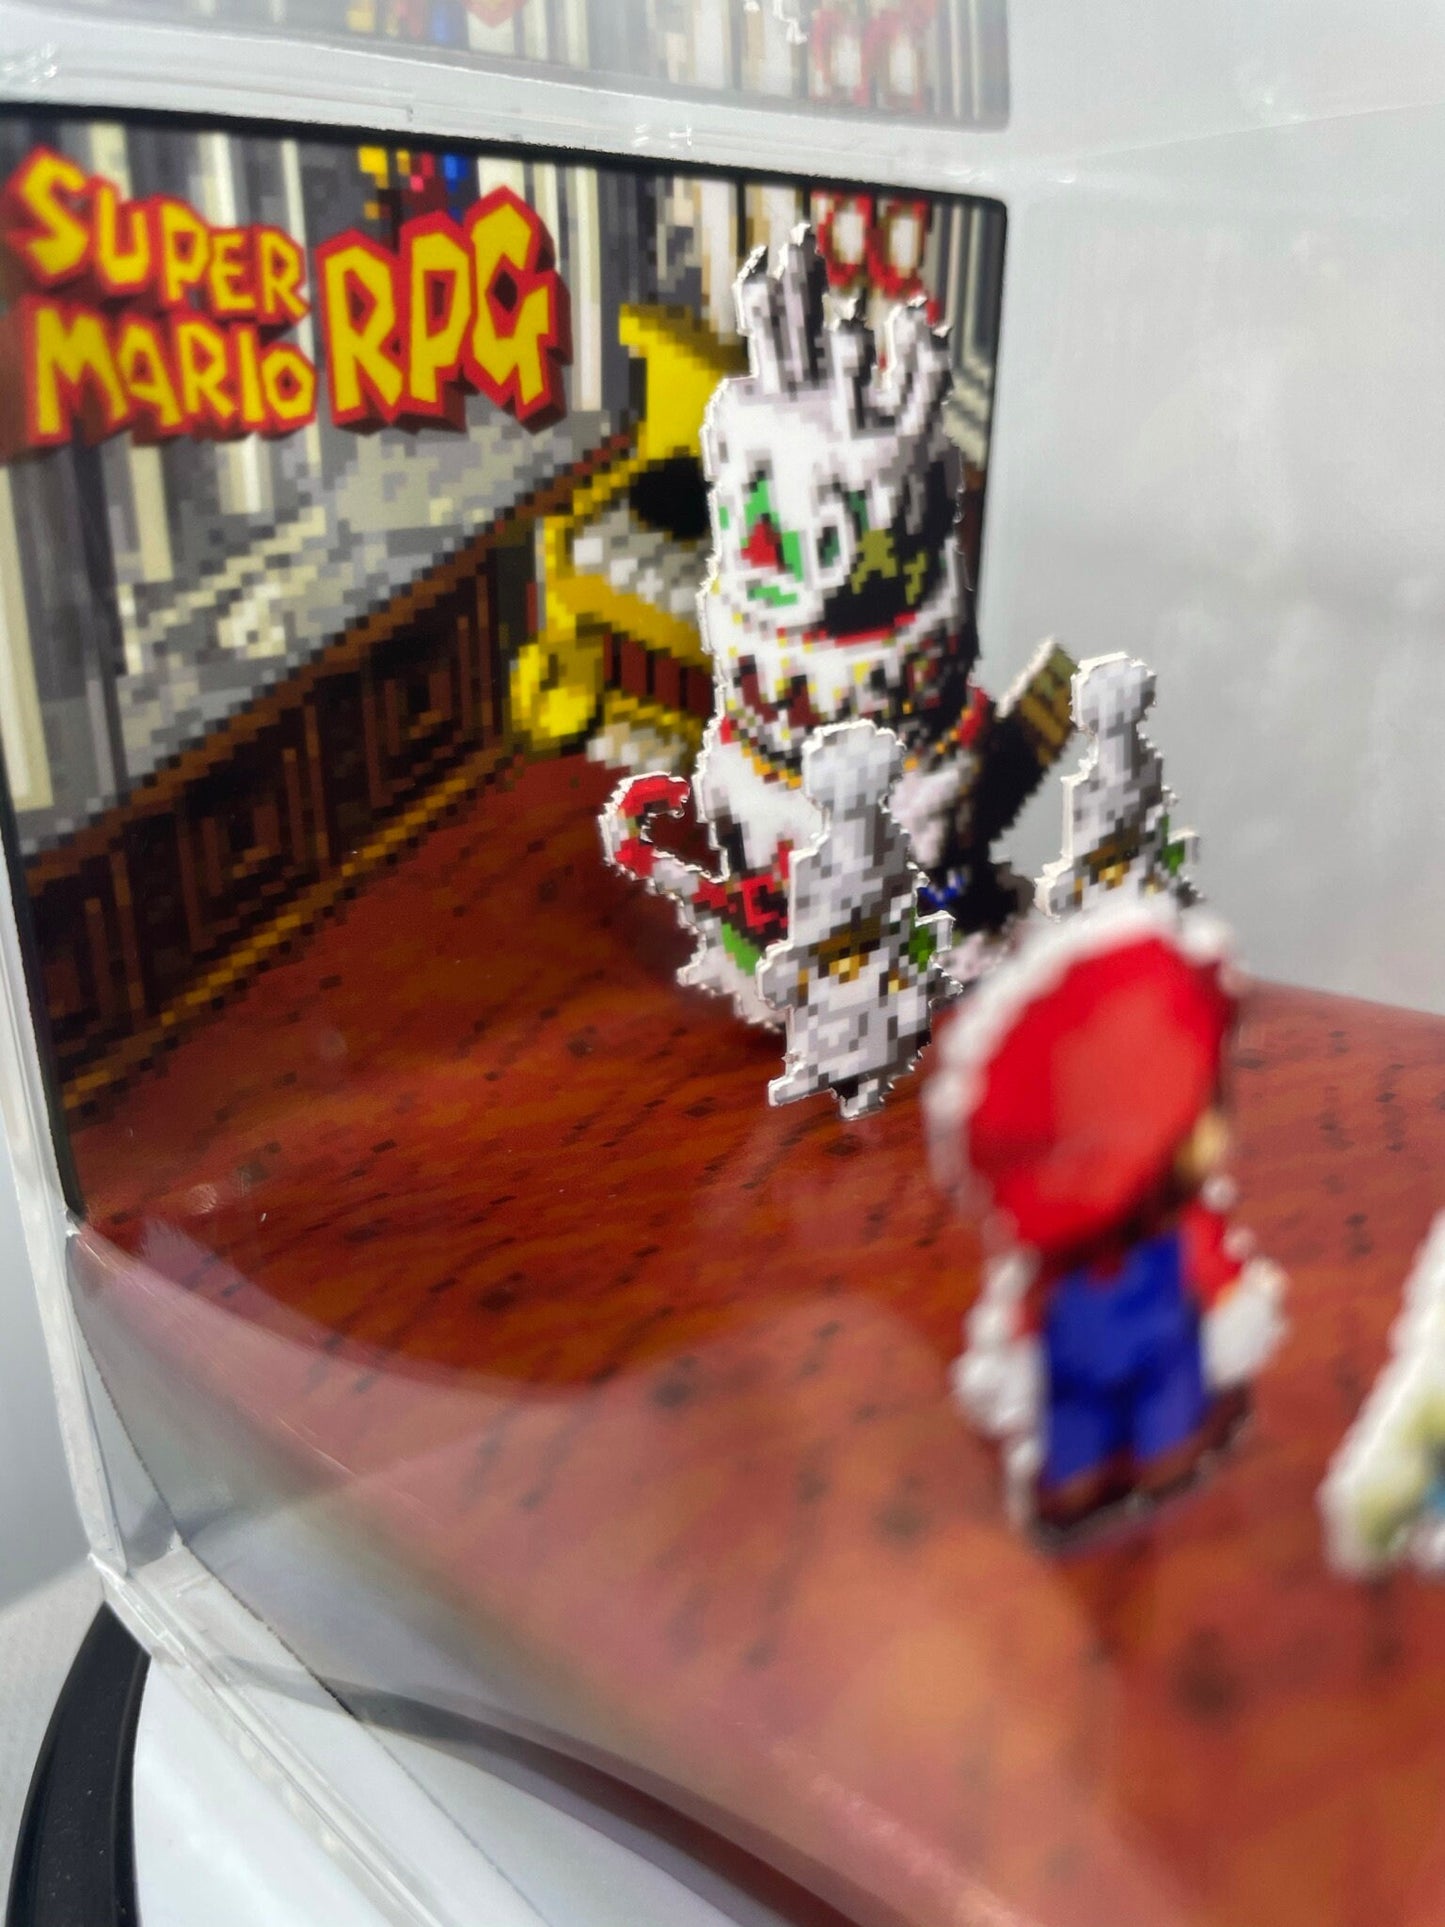 Mario RPG - Bundt Cake